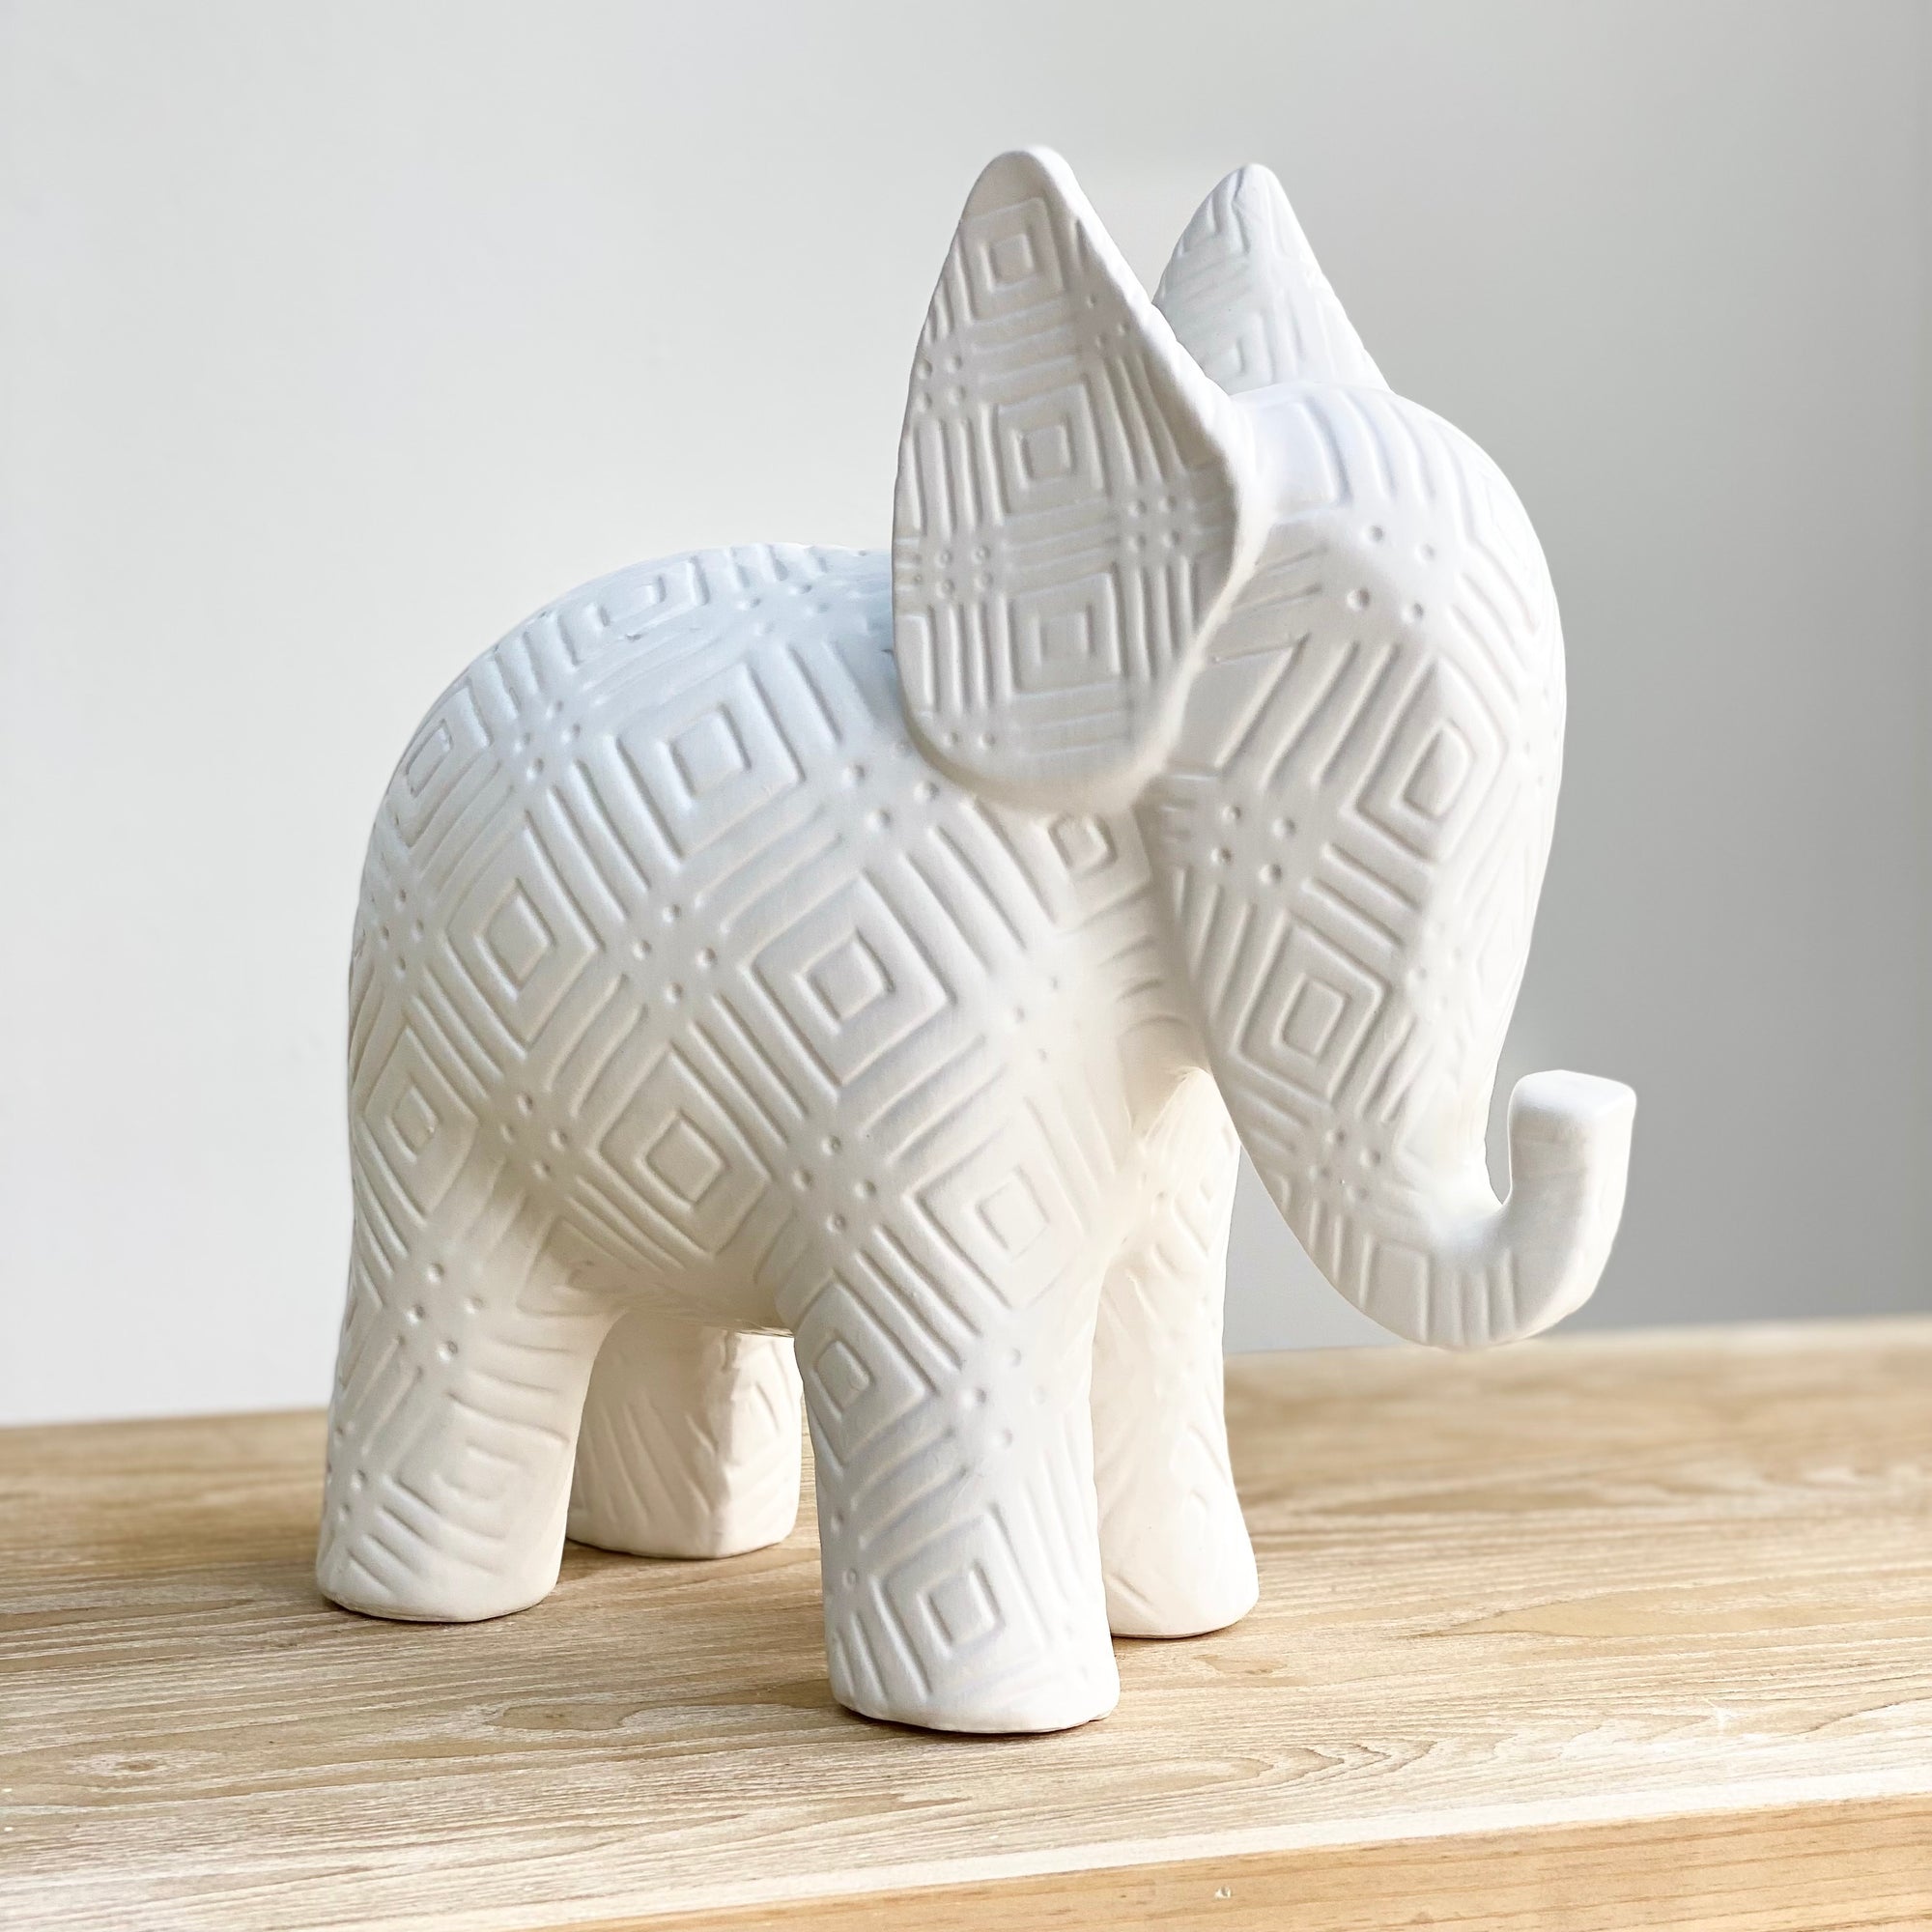 Ceramic Elephant Figurine Engraved Pattern 8.5"